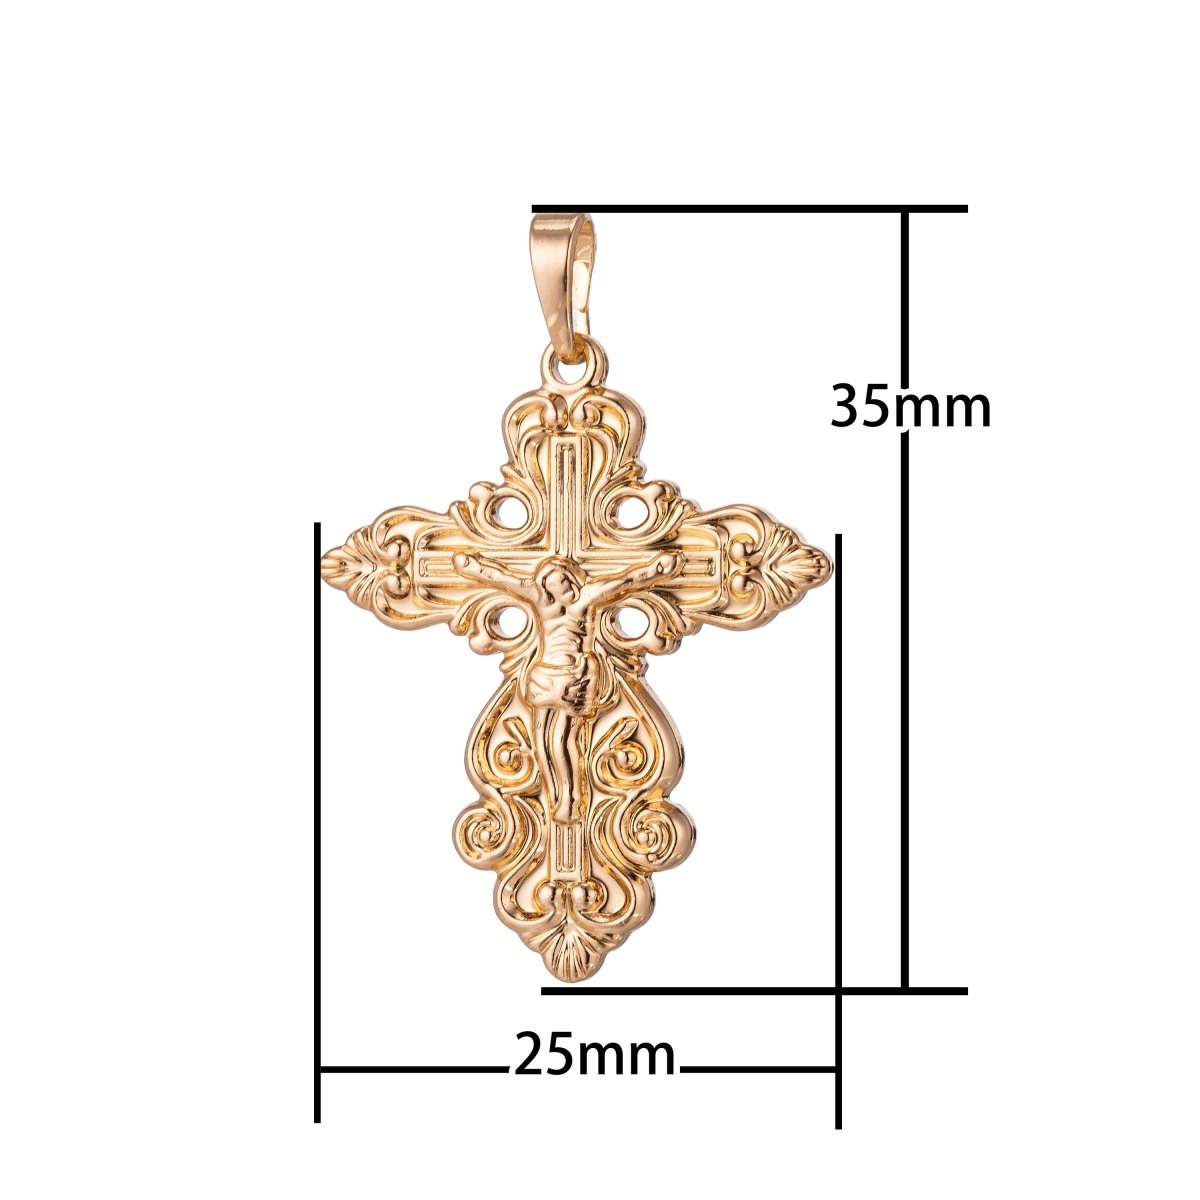 Gold Filled Ornate Cross Charm, Crucifix Charm, Gold Cross, Gold Ornate Cross Pendant Crucifix, Religious Charm Rosary Jewelry Making H-867 - DLUXCA